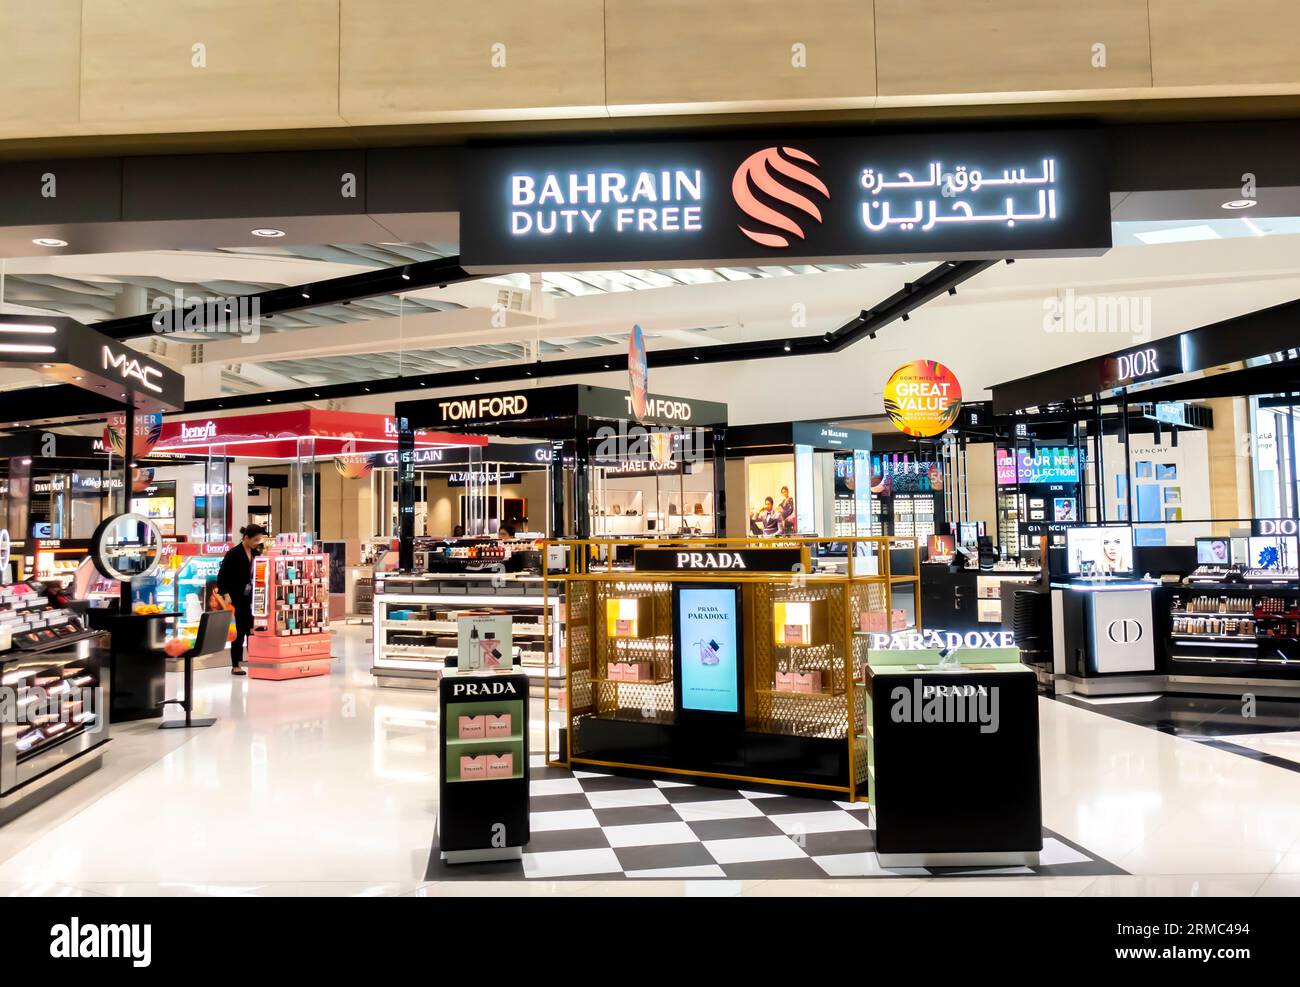 Bahrain airport duty free shop Stock Photo